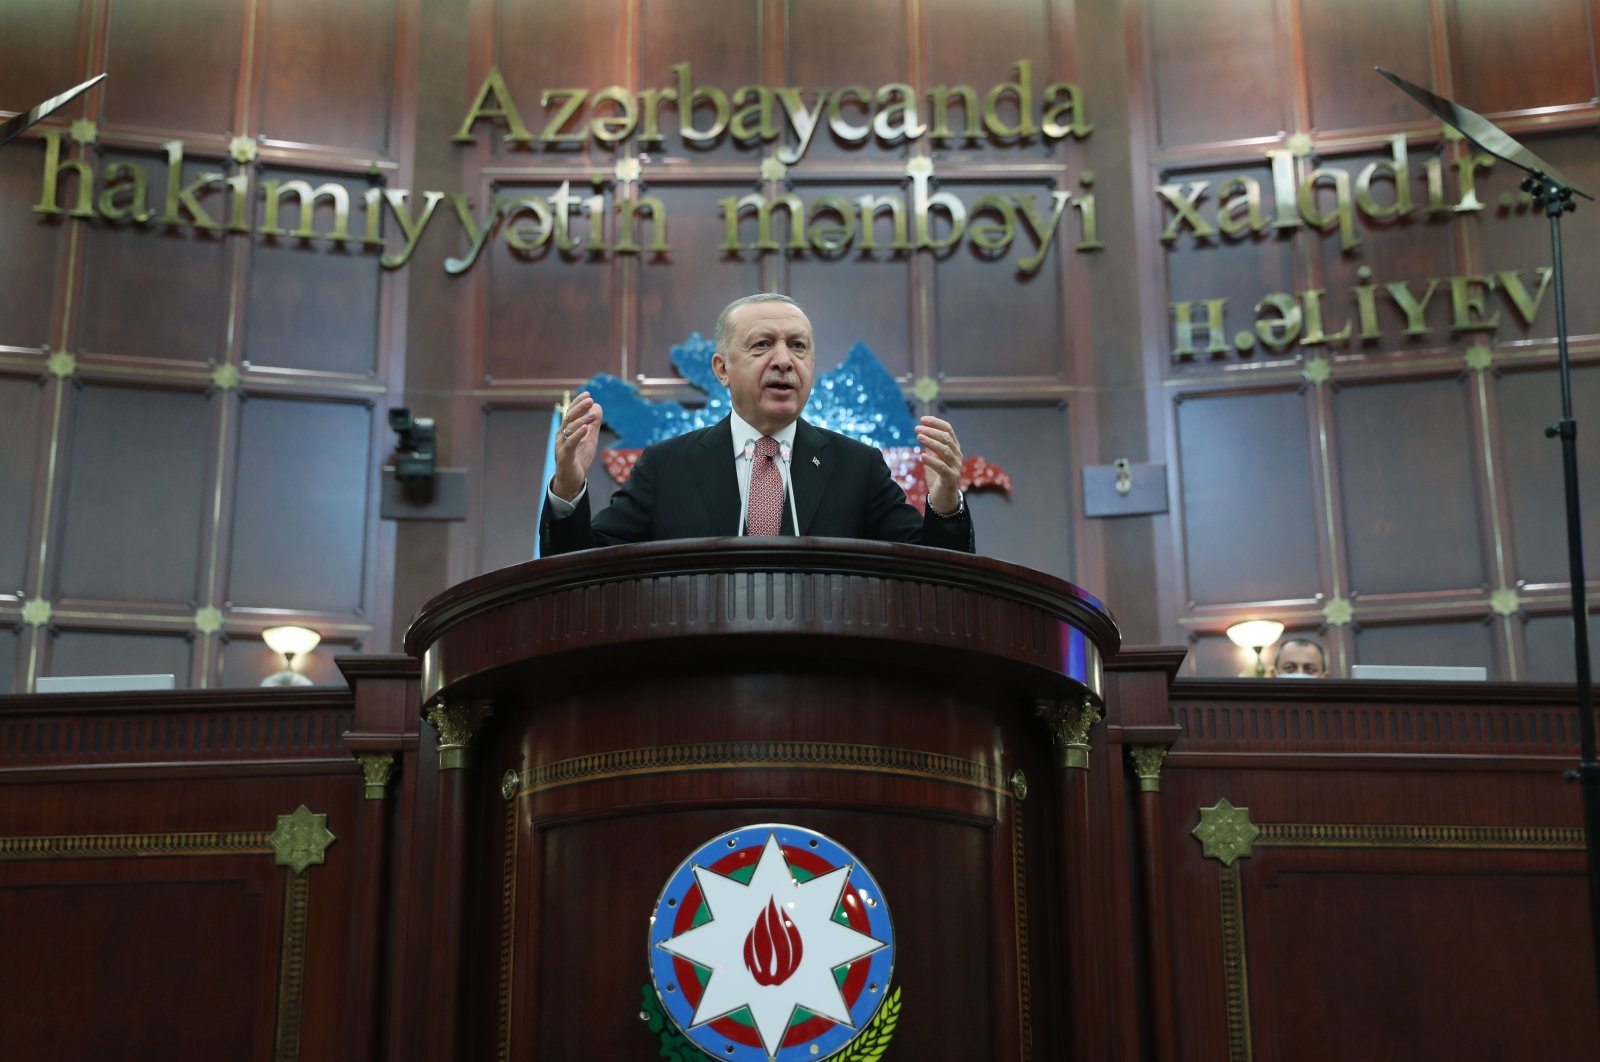  President Recep Tayyip Erdoğan addresses Azerbaijan's National Assembly in the capital Baku, Azerbaijan, June 16, 2021. (AA Photo)